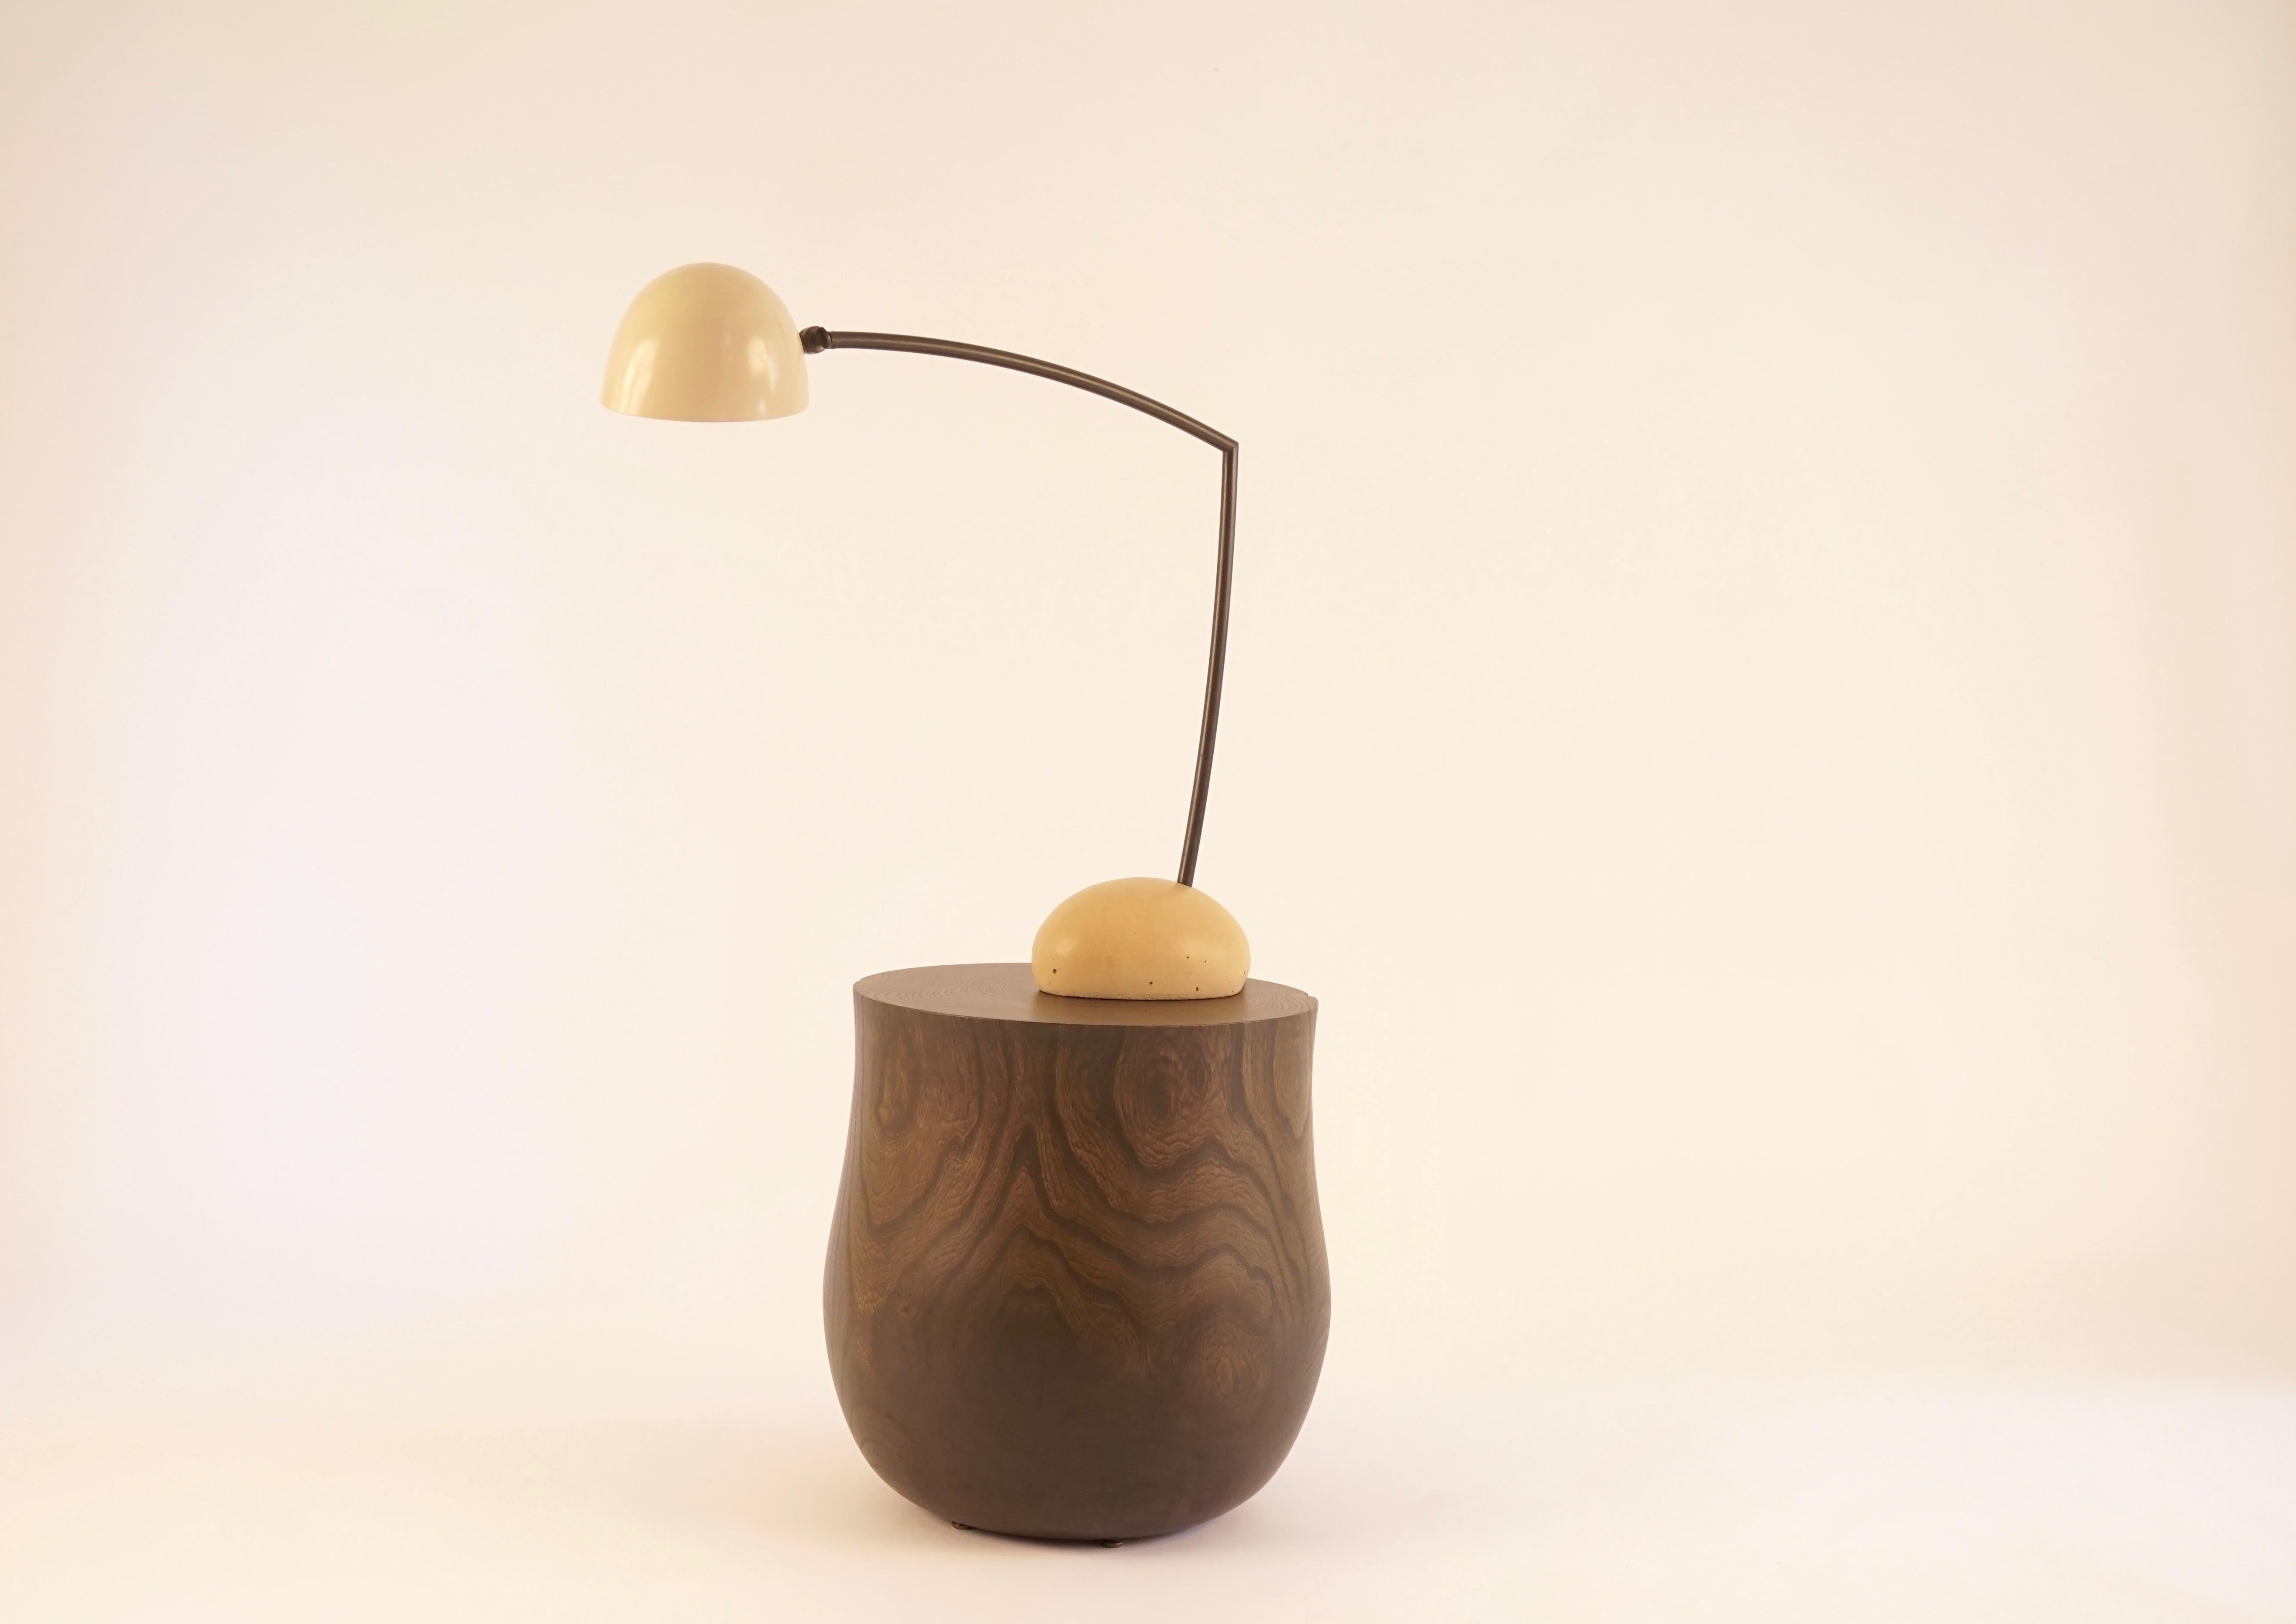 Cast Custom Skye Table Lamp Medium, with Almond Shade and Light Base